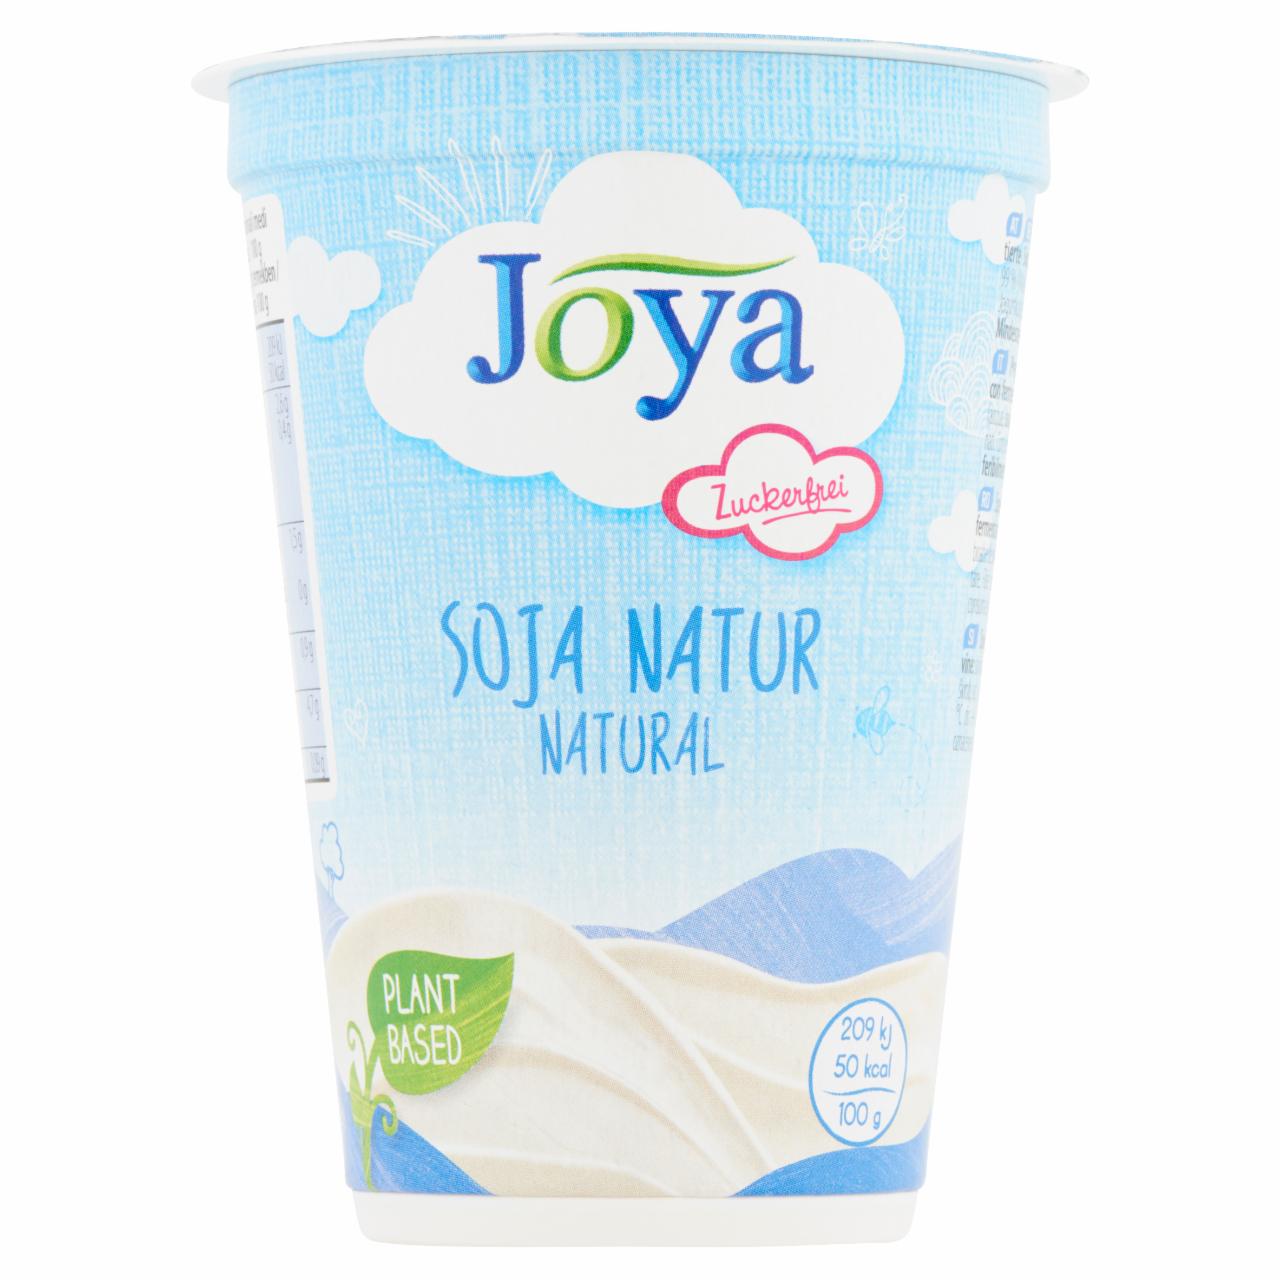 Photo - Joya Soya Fermented Soya Speciality 200 g